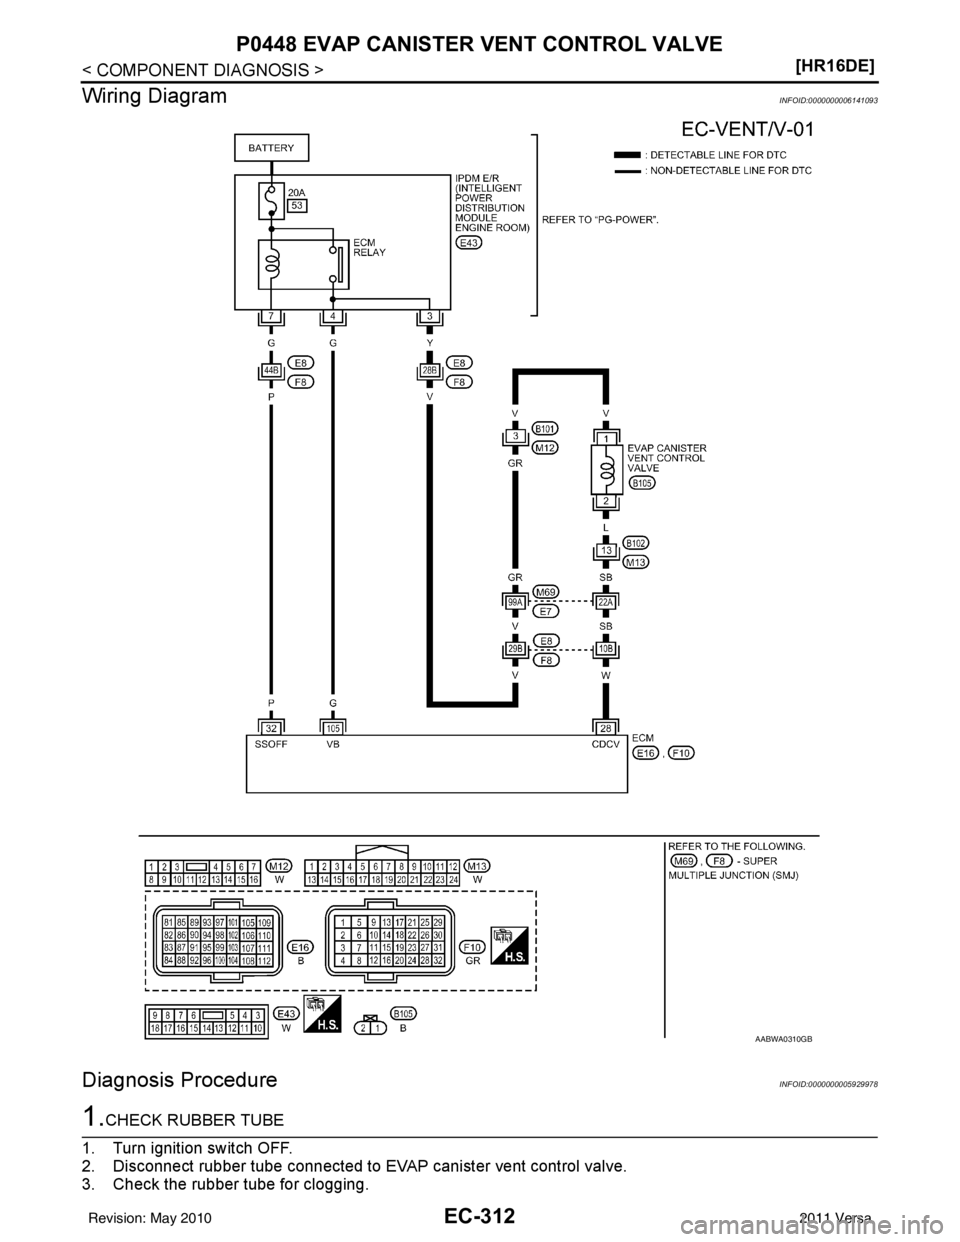 NISSAN LATIO 2011  Service Repair Manual EC-312
< COMPONENT DIAGNOSIS >[HR16DE]
P0448 EVAP CANISTER VENT CONTROL VALVE
Wiring Diagram
INFOID:0000000006141093
Diagnosis ProcedureINFOID:0000000005929978
1.CHECK RUBBER TUBE
1. Turn ignition swi